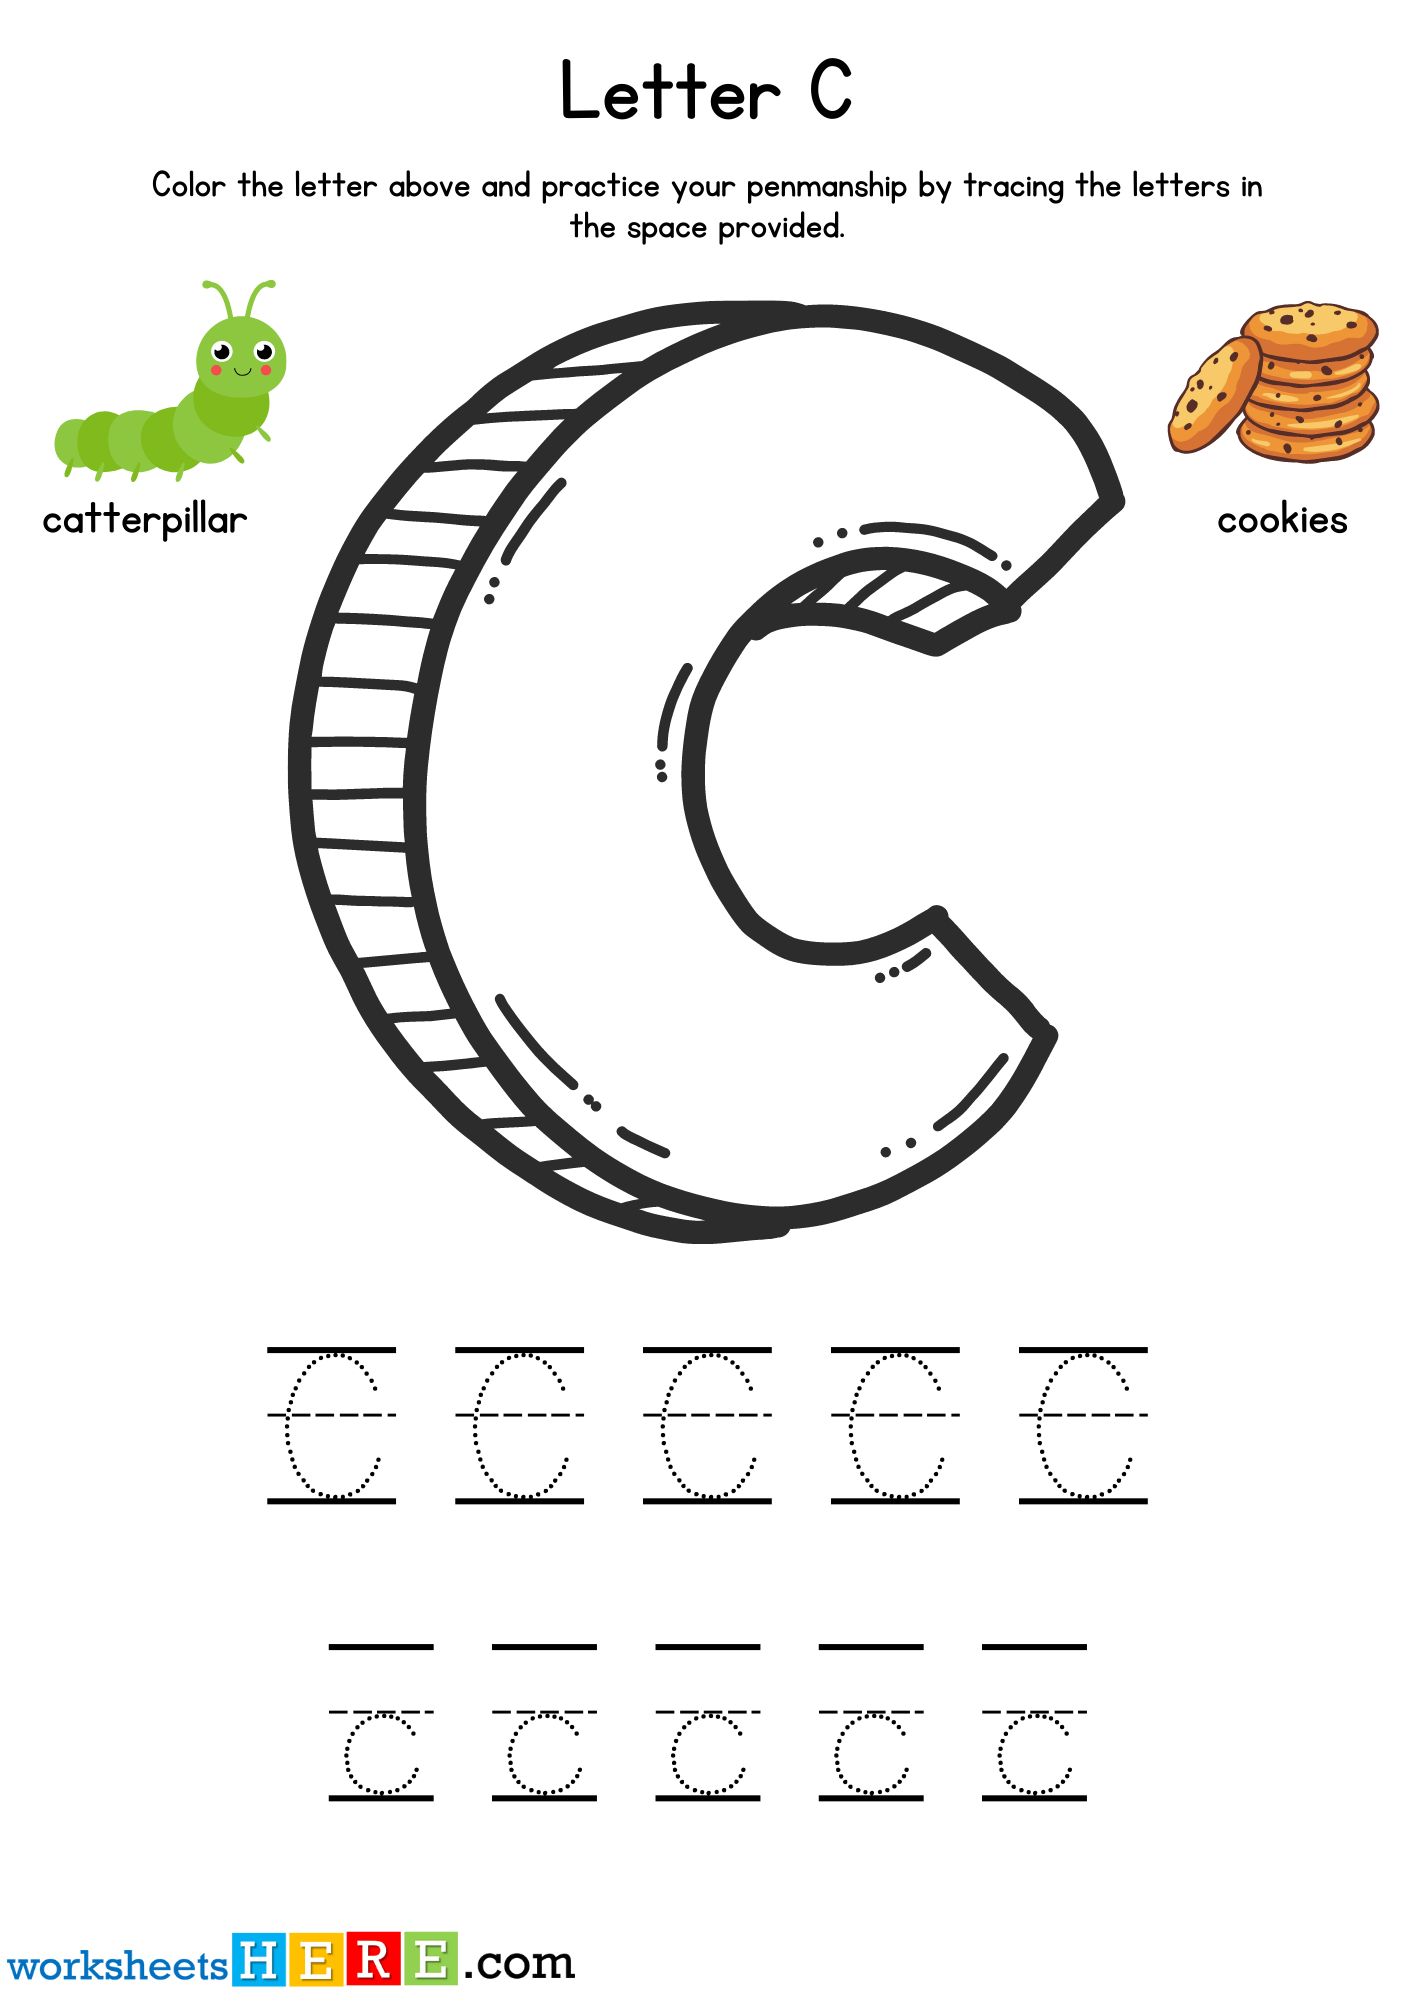 Color and Trace Letter C Exercises PDF Worksheet For Kindergarten and Kids